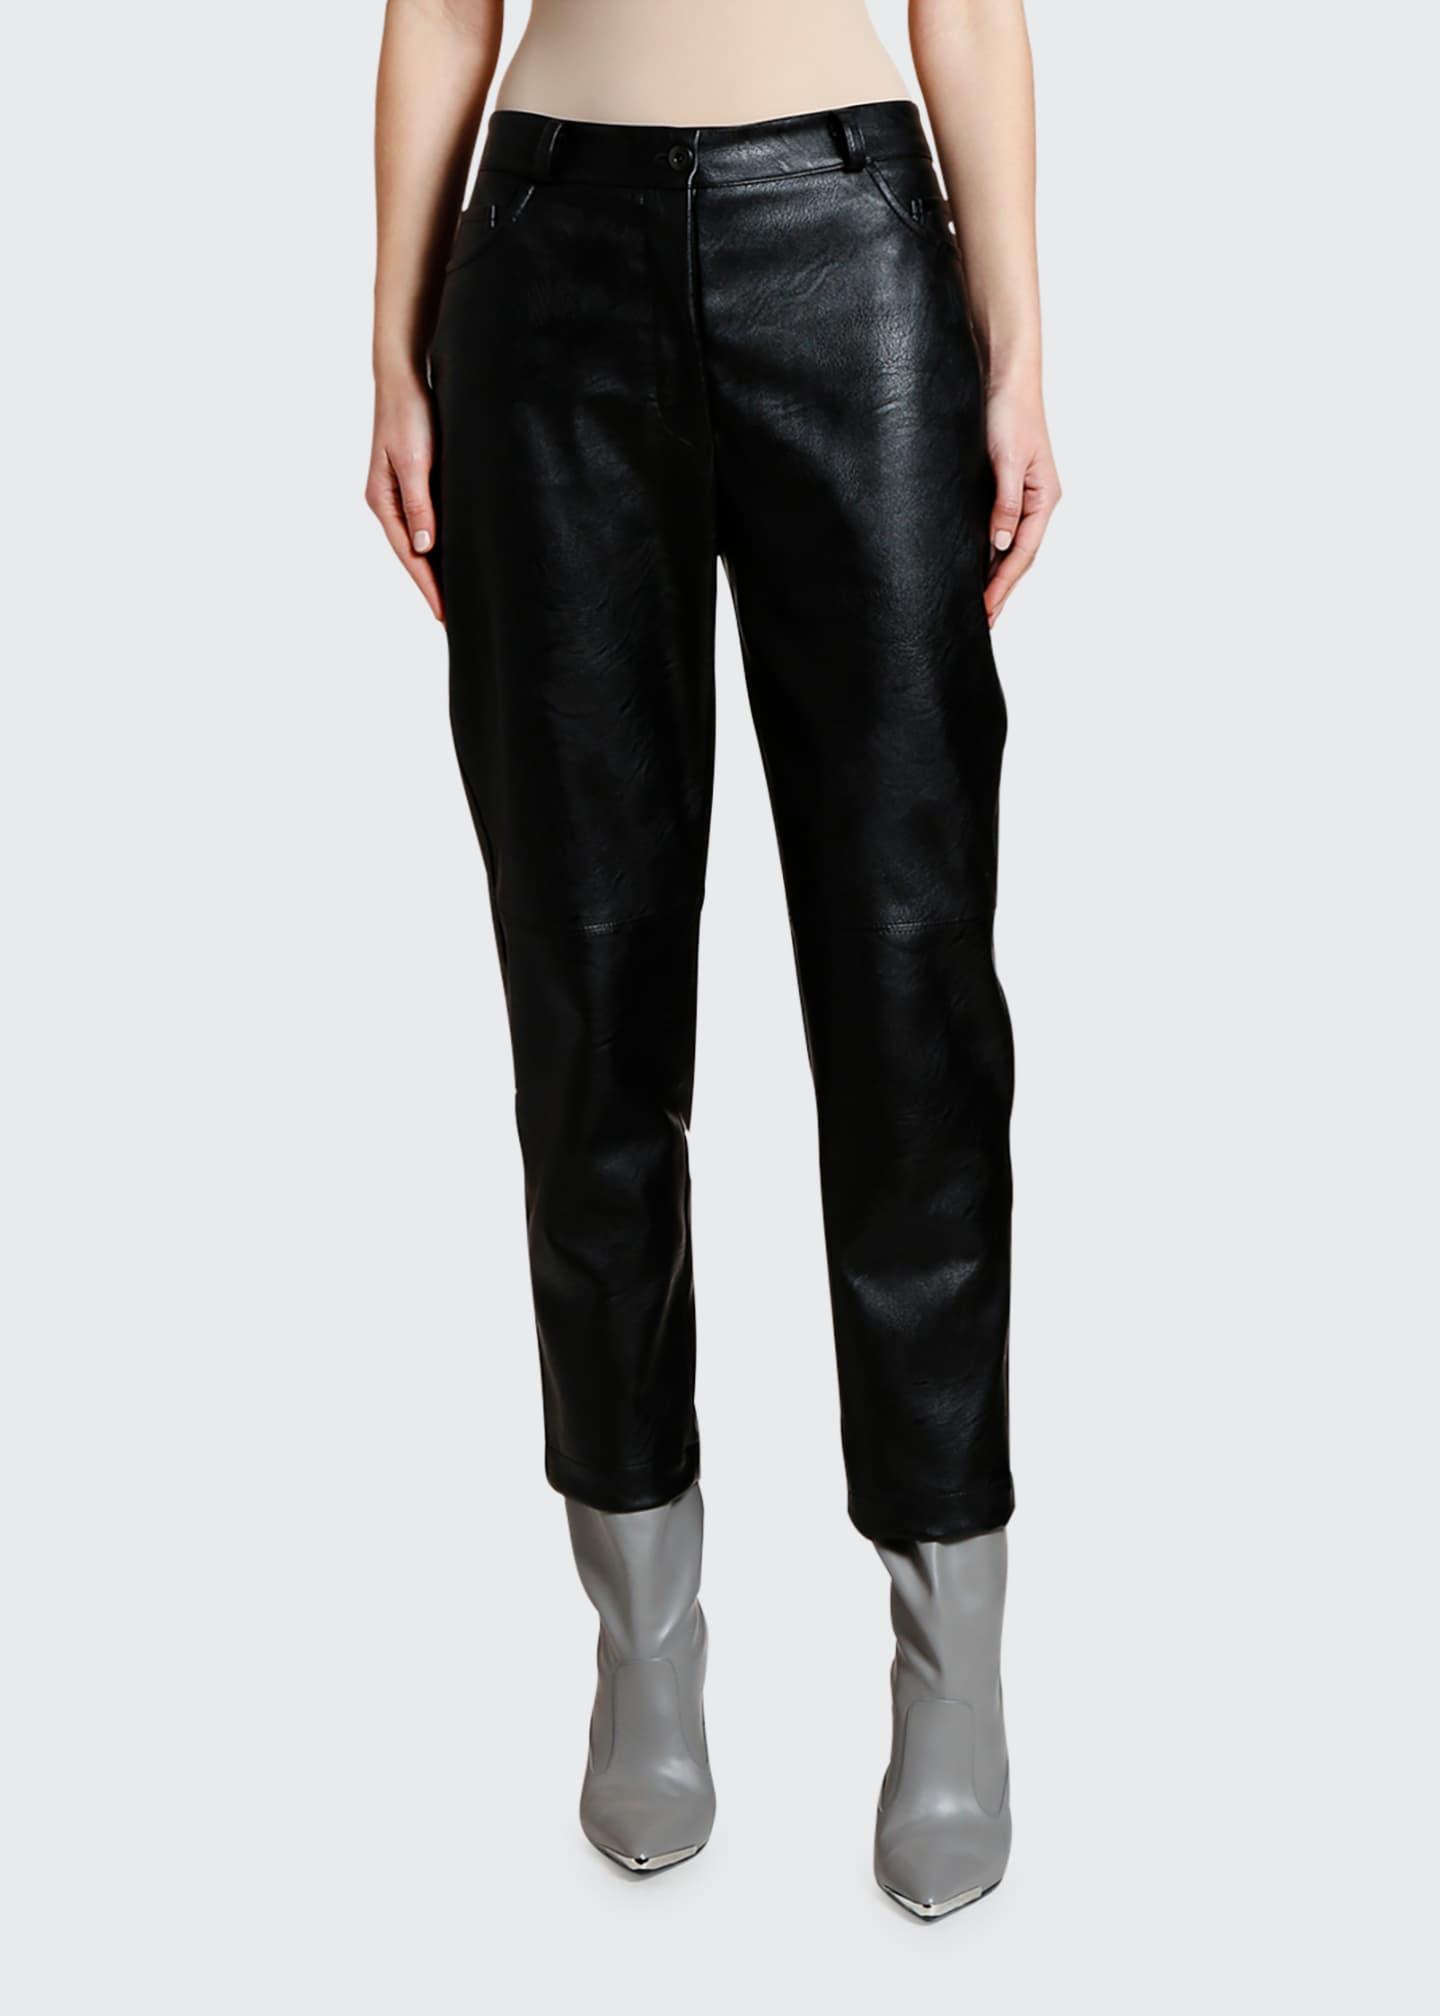 stella mccartney leather pants